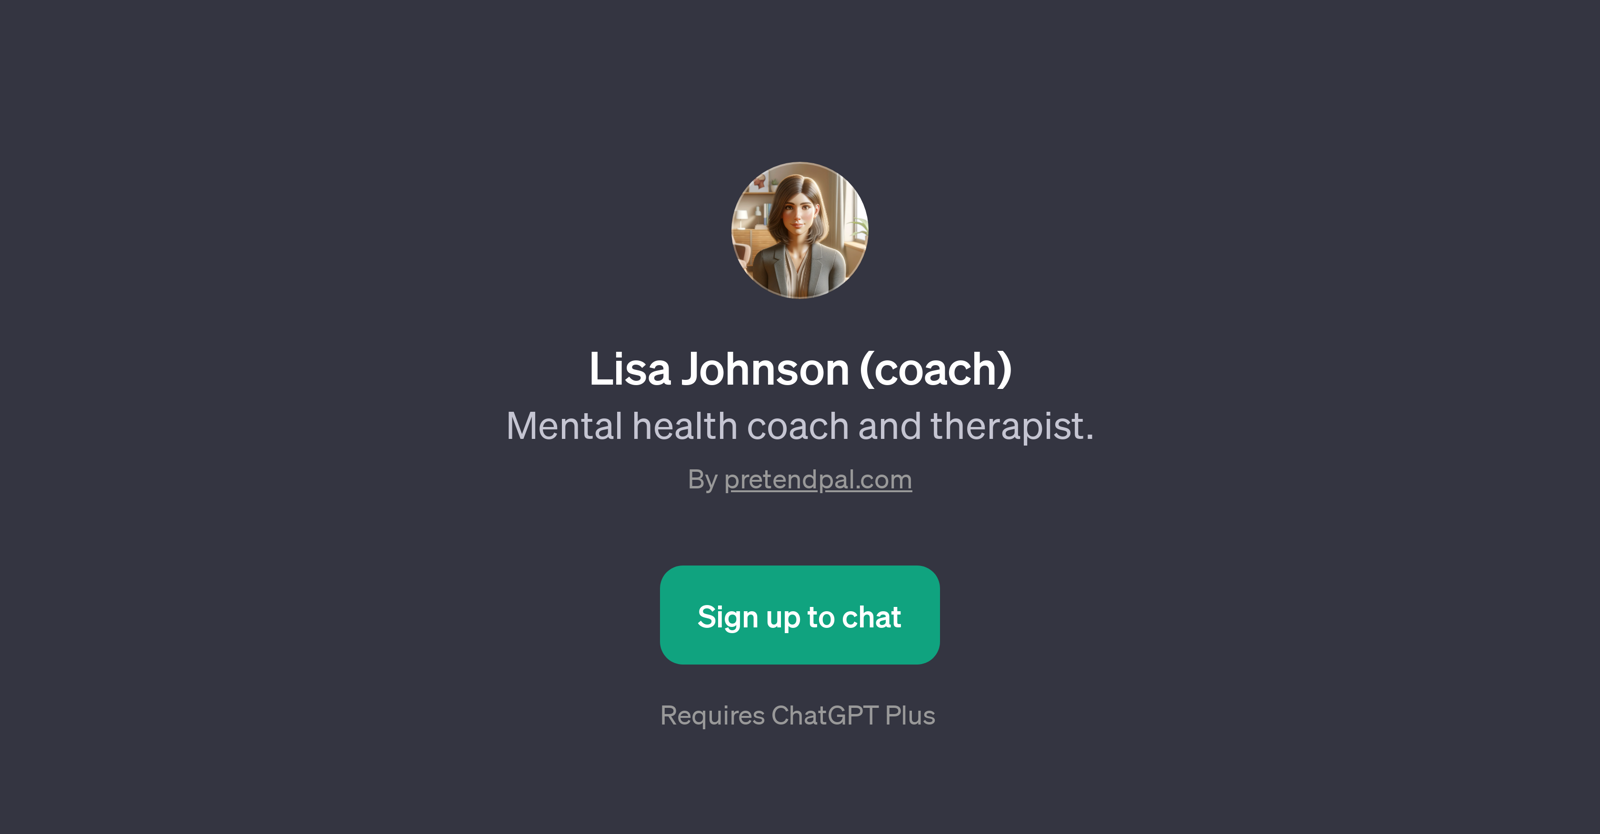 Lisa Johnson (coach) website